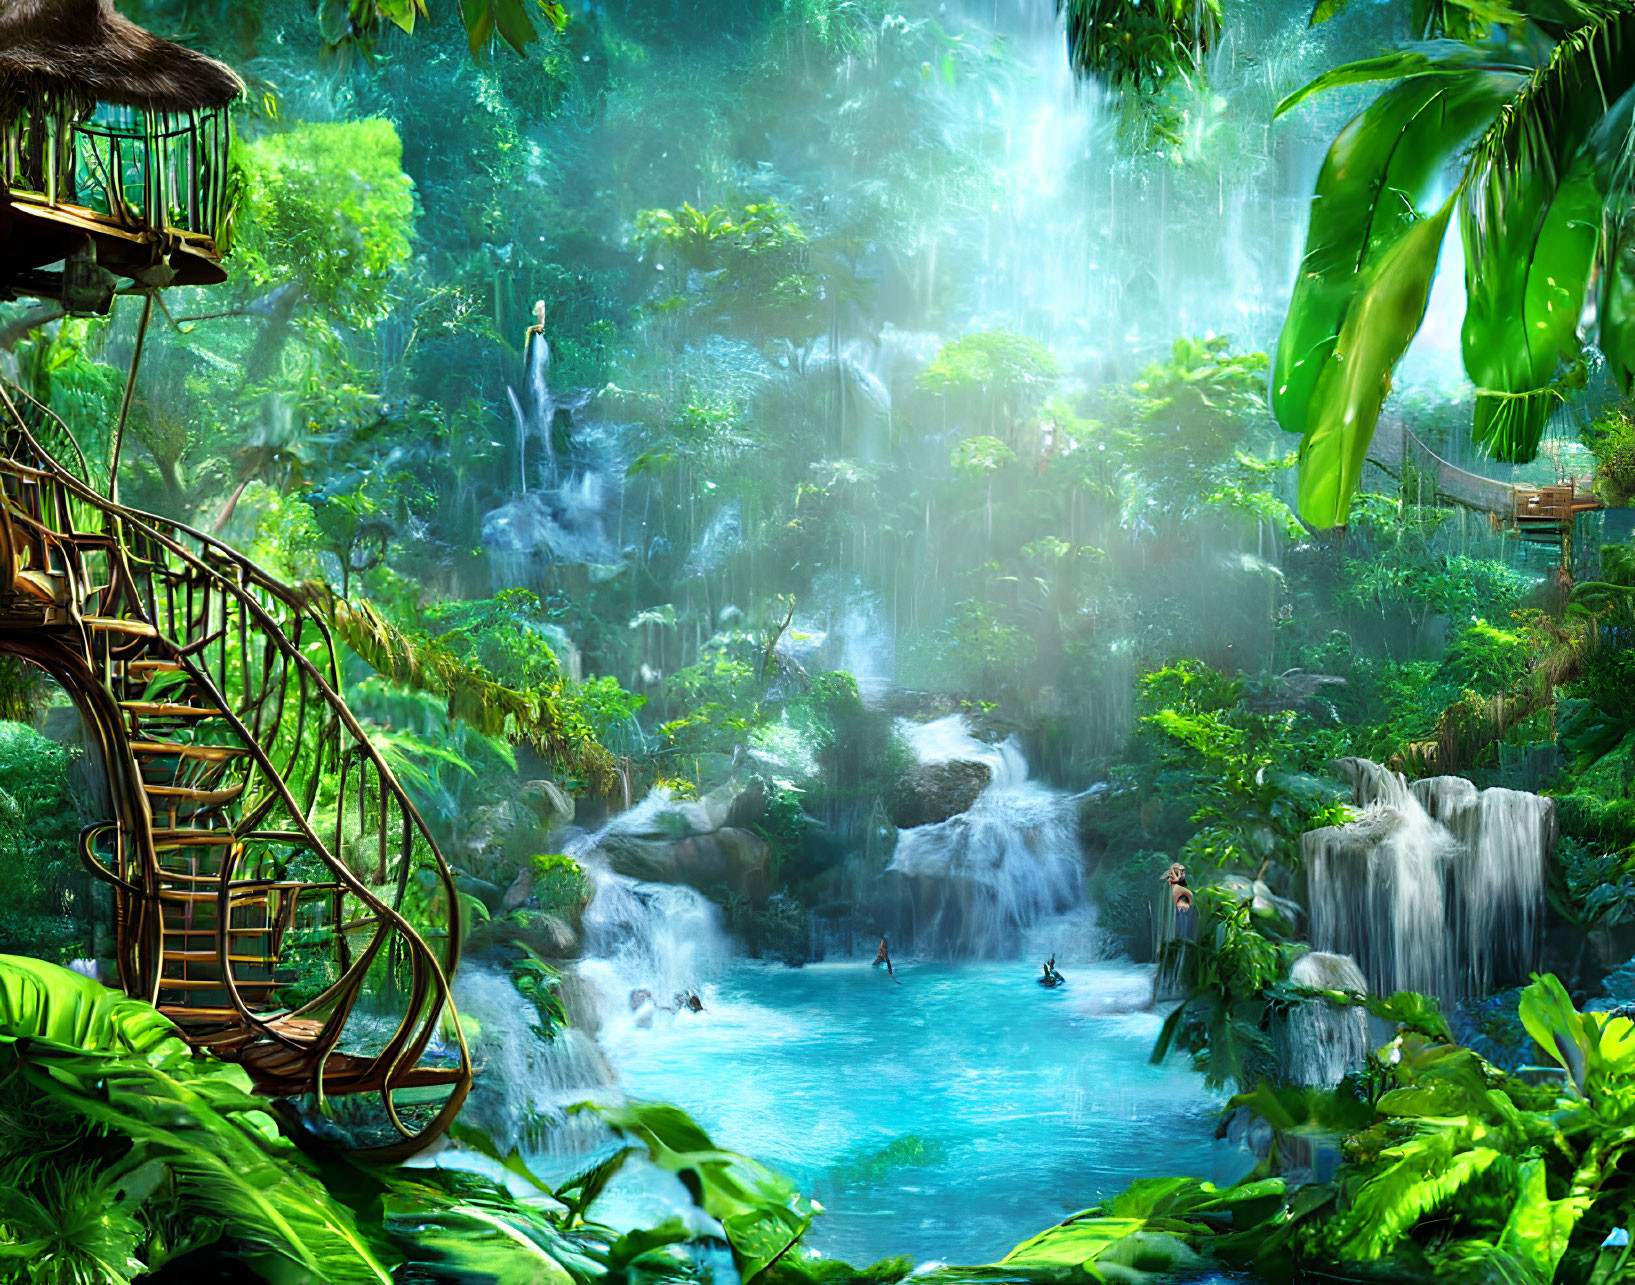 Lush green jungle with waterfalls, wooden bridge, hut in misty foliage